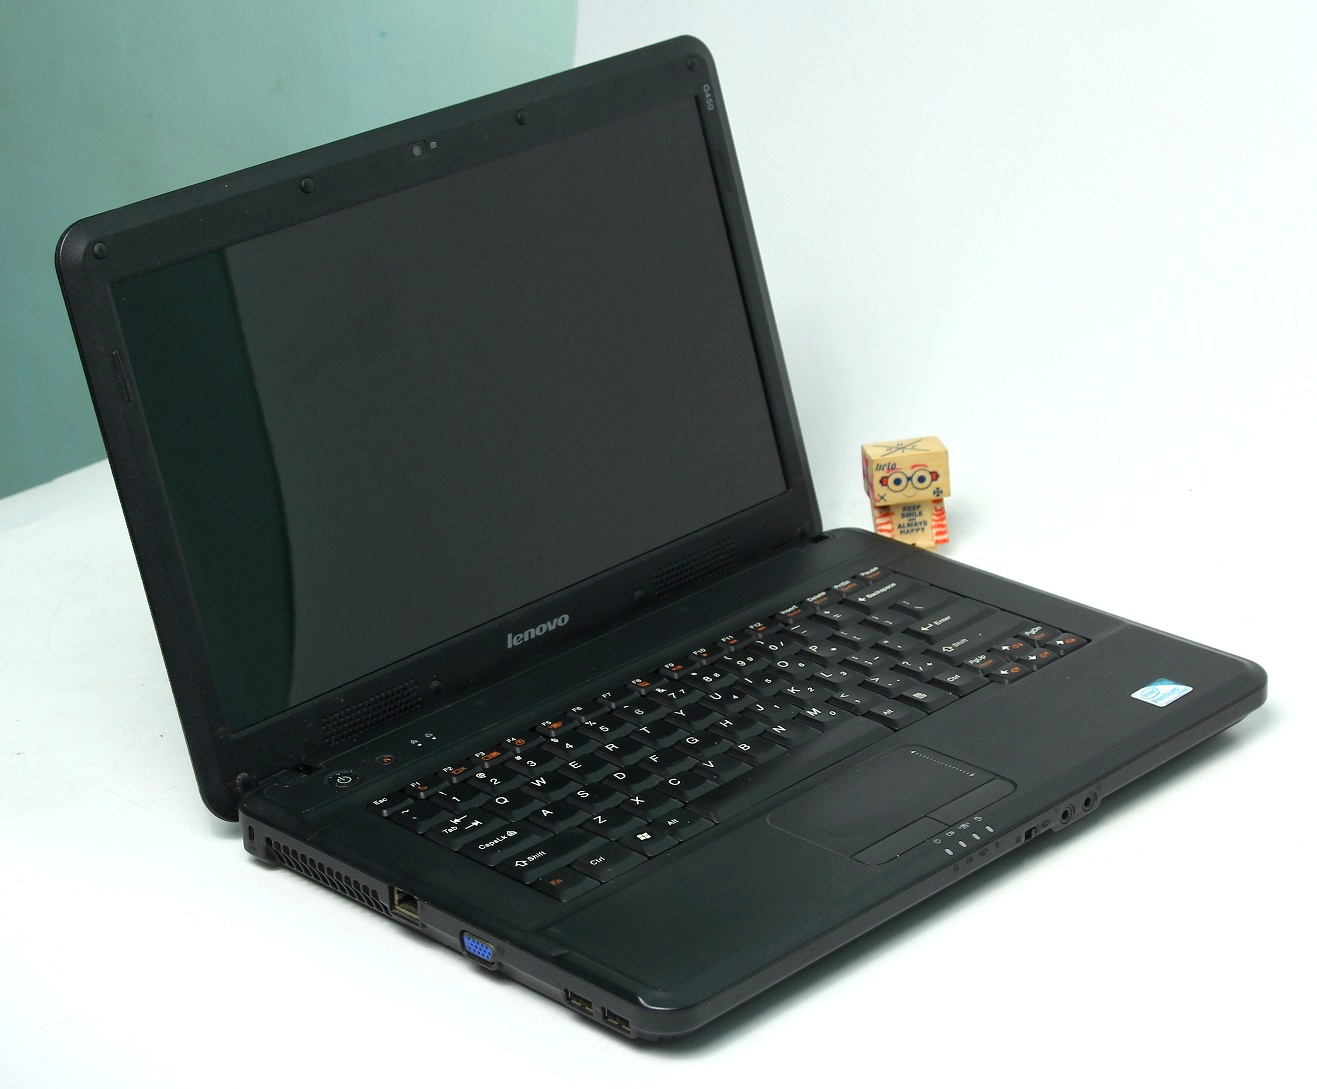 Jual laptop lenovo G450 Bekas Jual Beli Laptop Second 